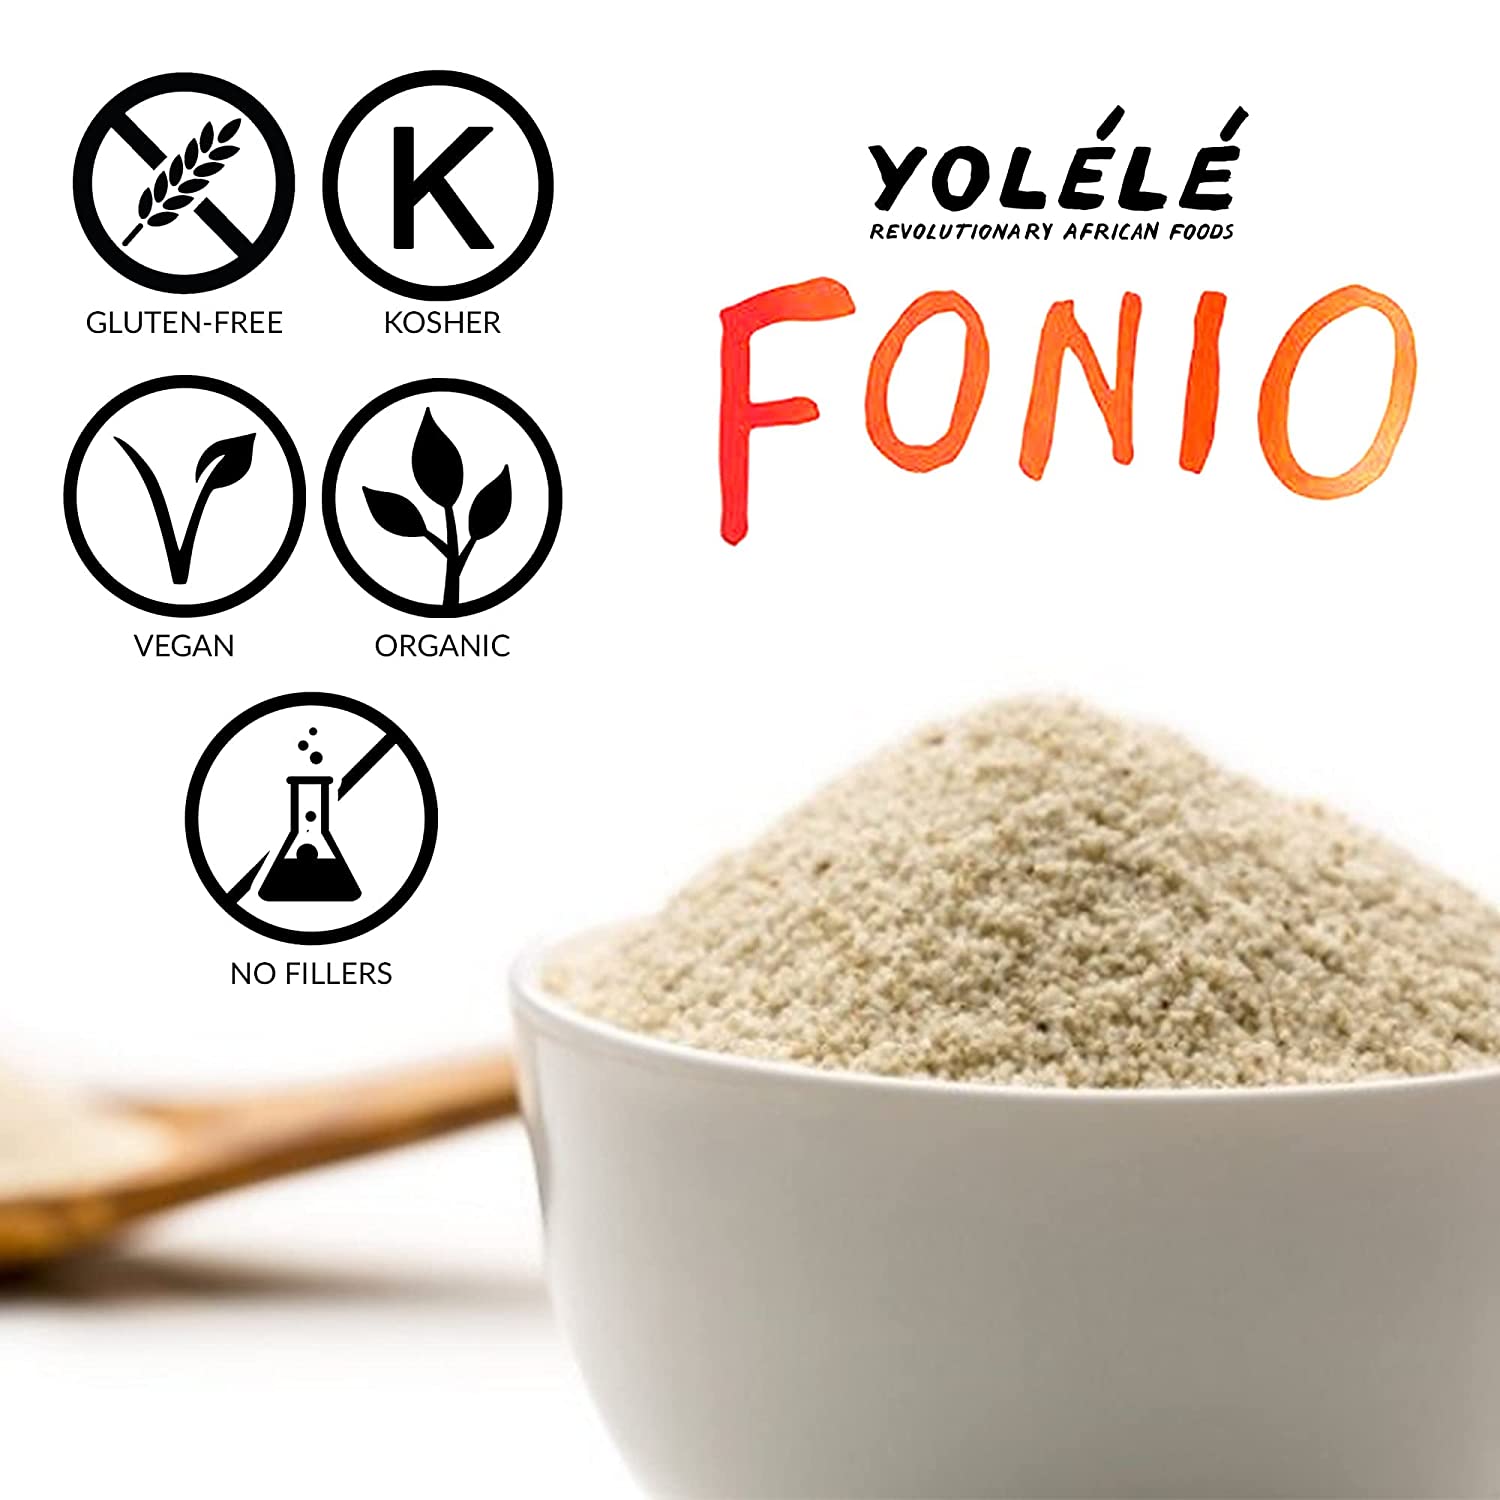 Yolele Fonio High Protein Fiber Super Food Rice Alternative